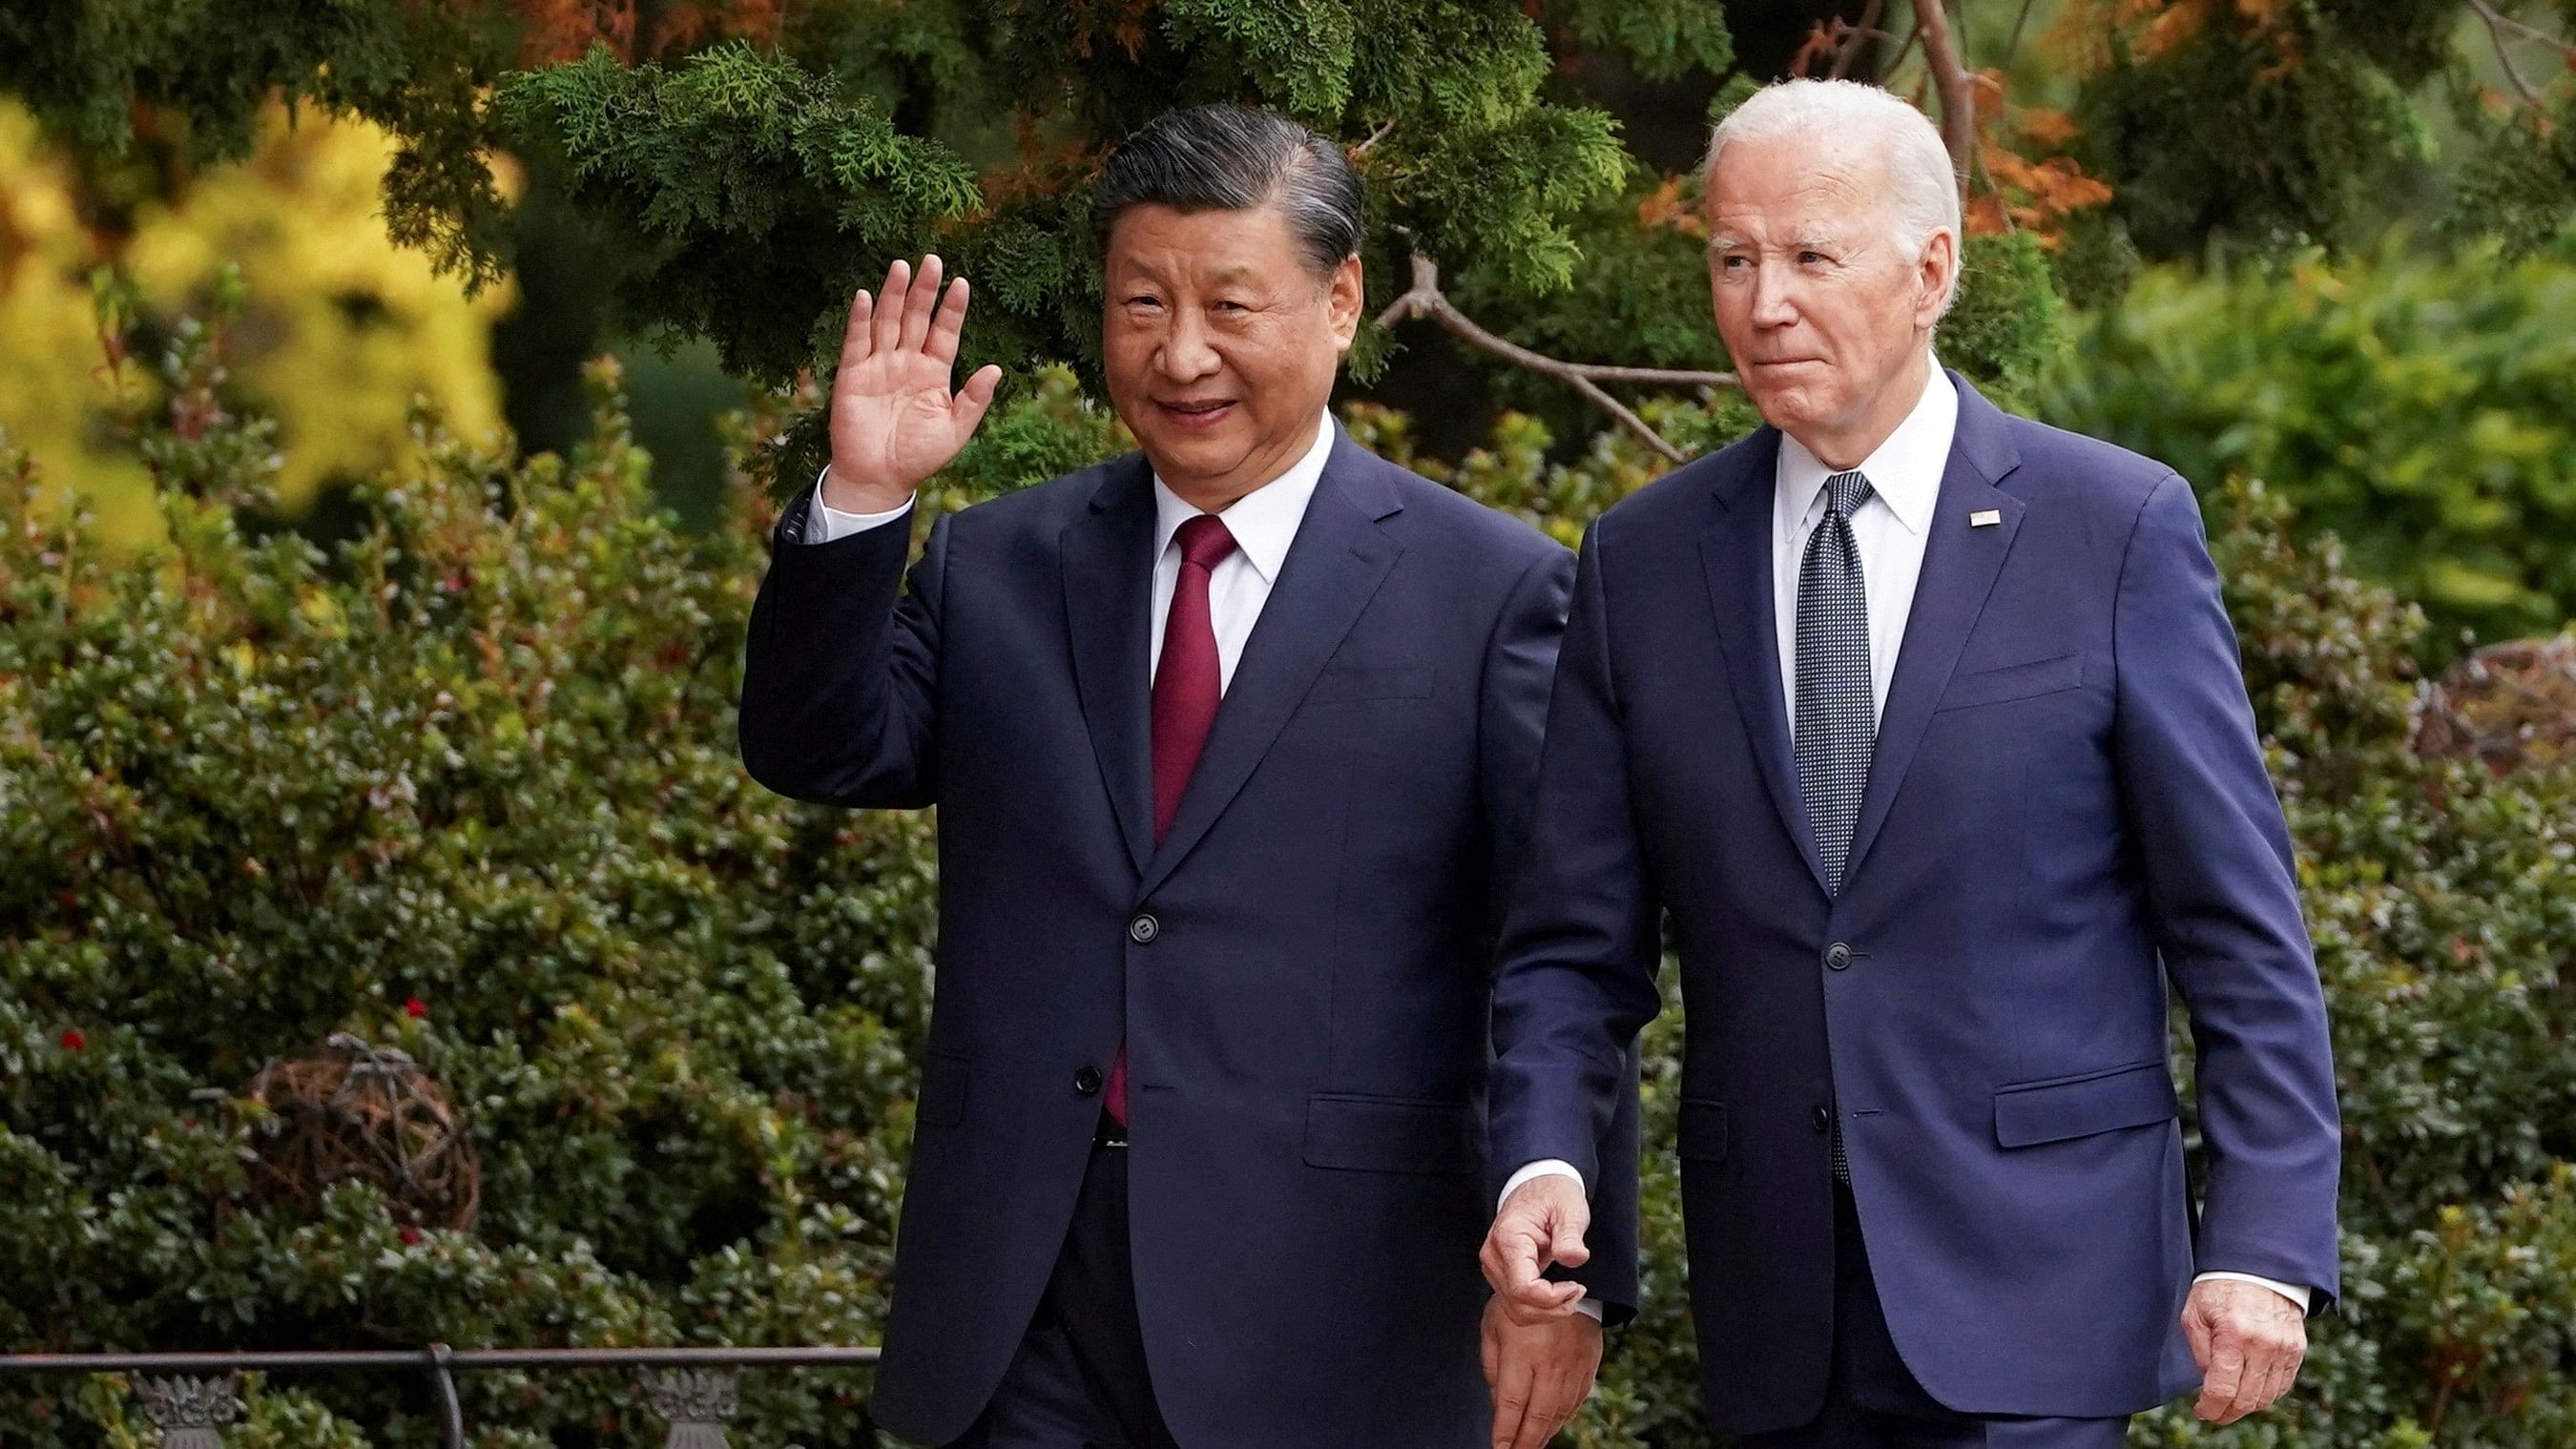 <div class="paragraphs"><p>Chinese President Xi Jinping waves as he walks with U.S. President Joe Biden </p></div>